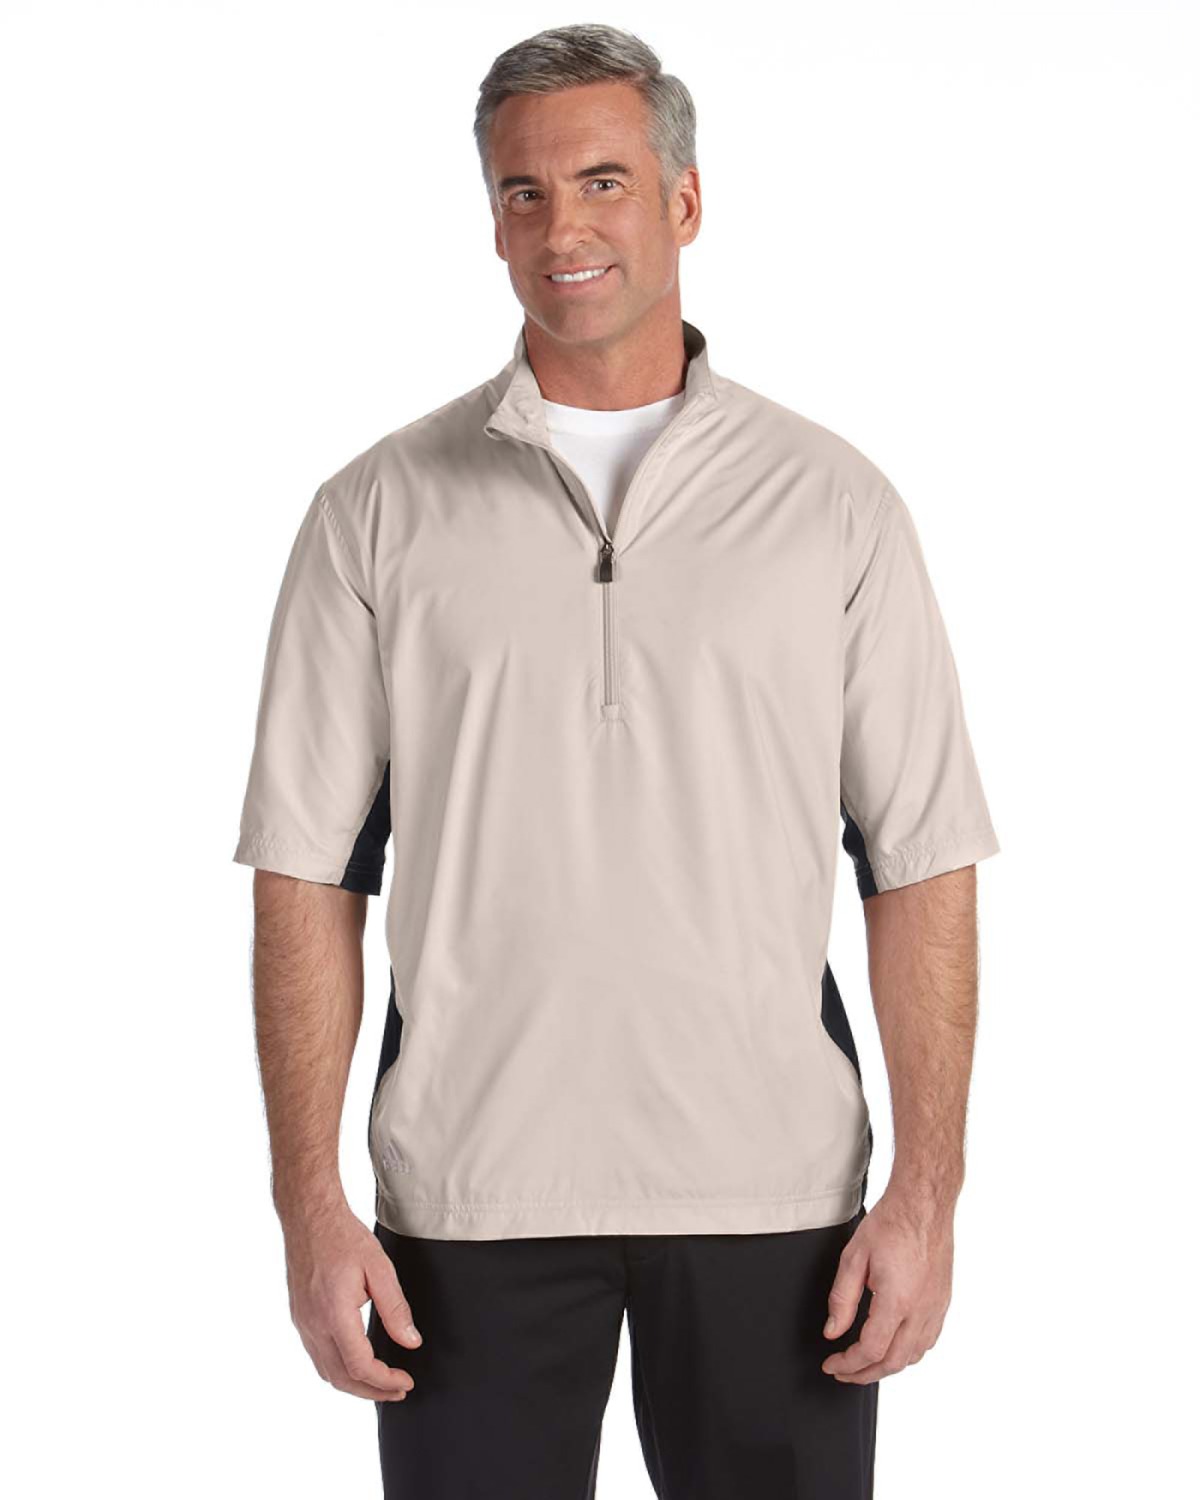 Adidas Golf A167 Men's ClimaLite Colorblock Half-Zip Wind Shirt Short